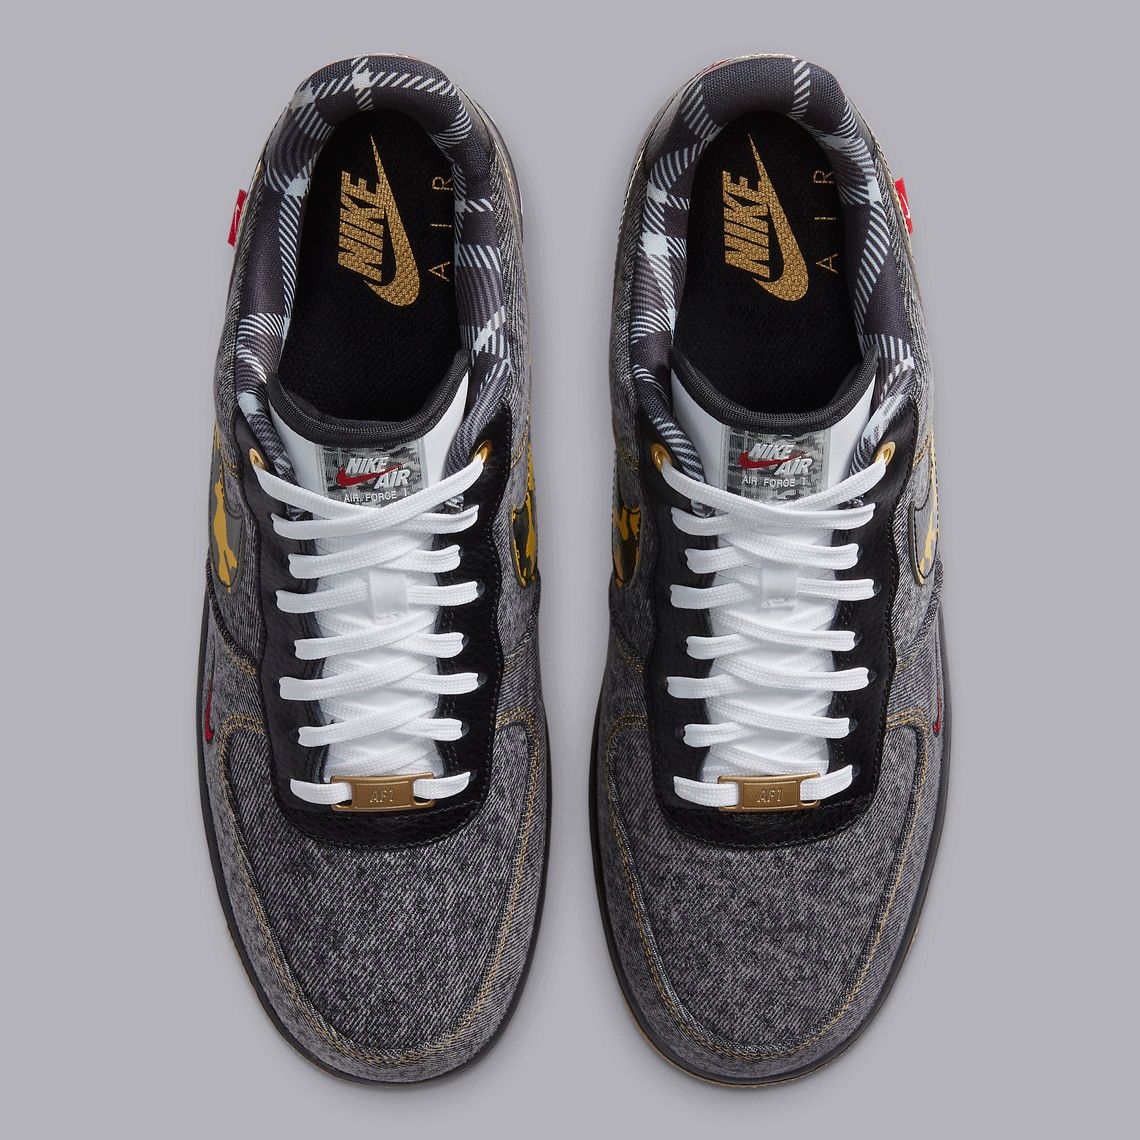 Nike Give the Air Force 1 a Denim Camo Combo - Sneaker Freaker